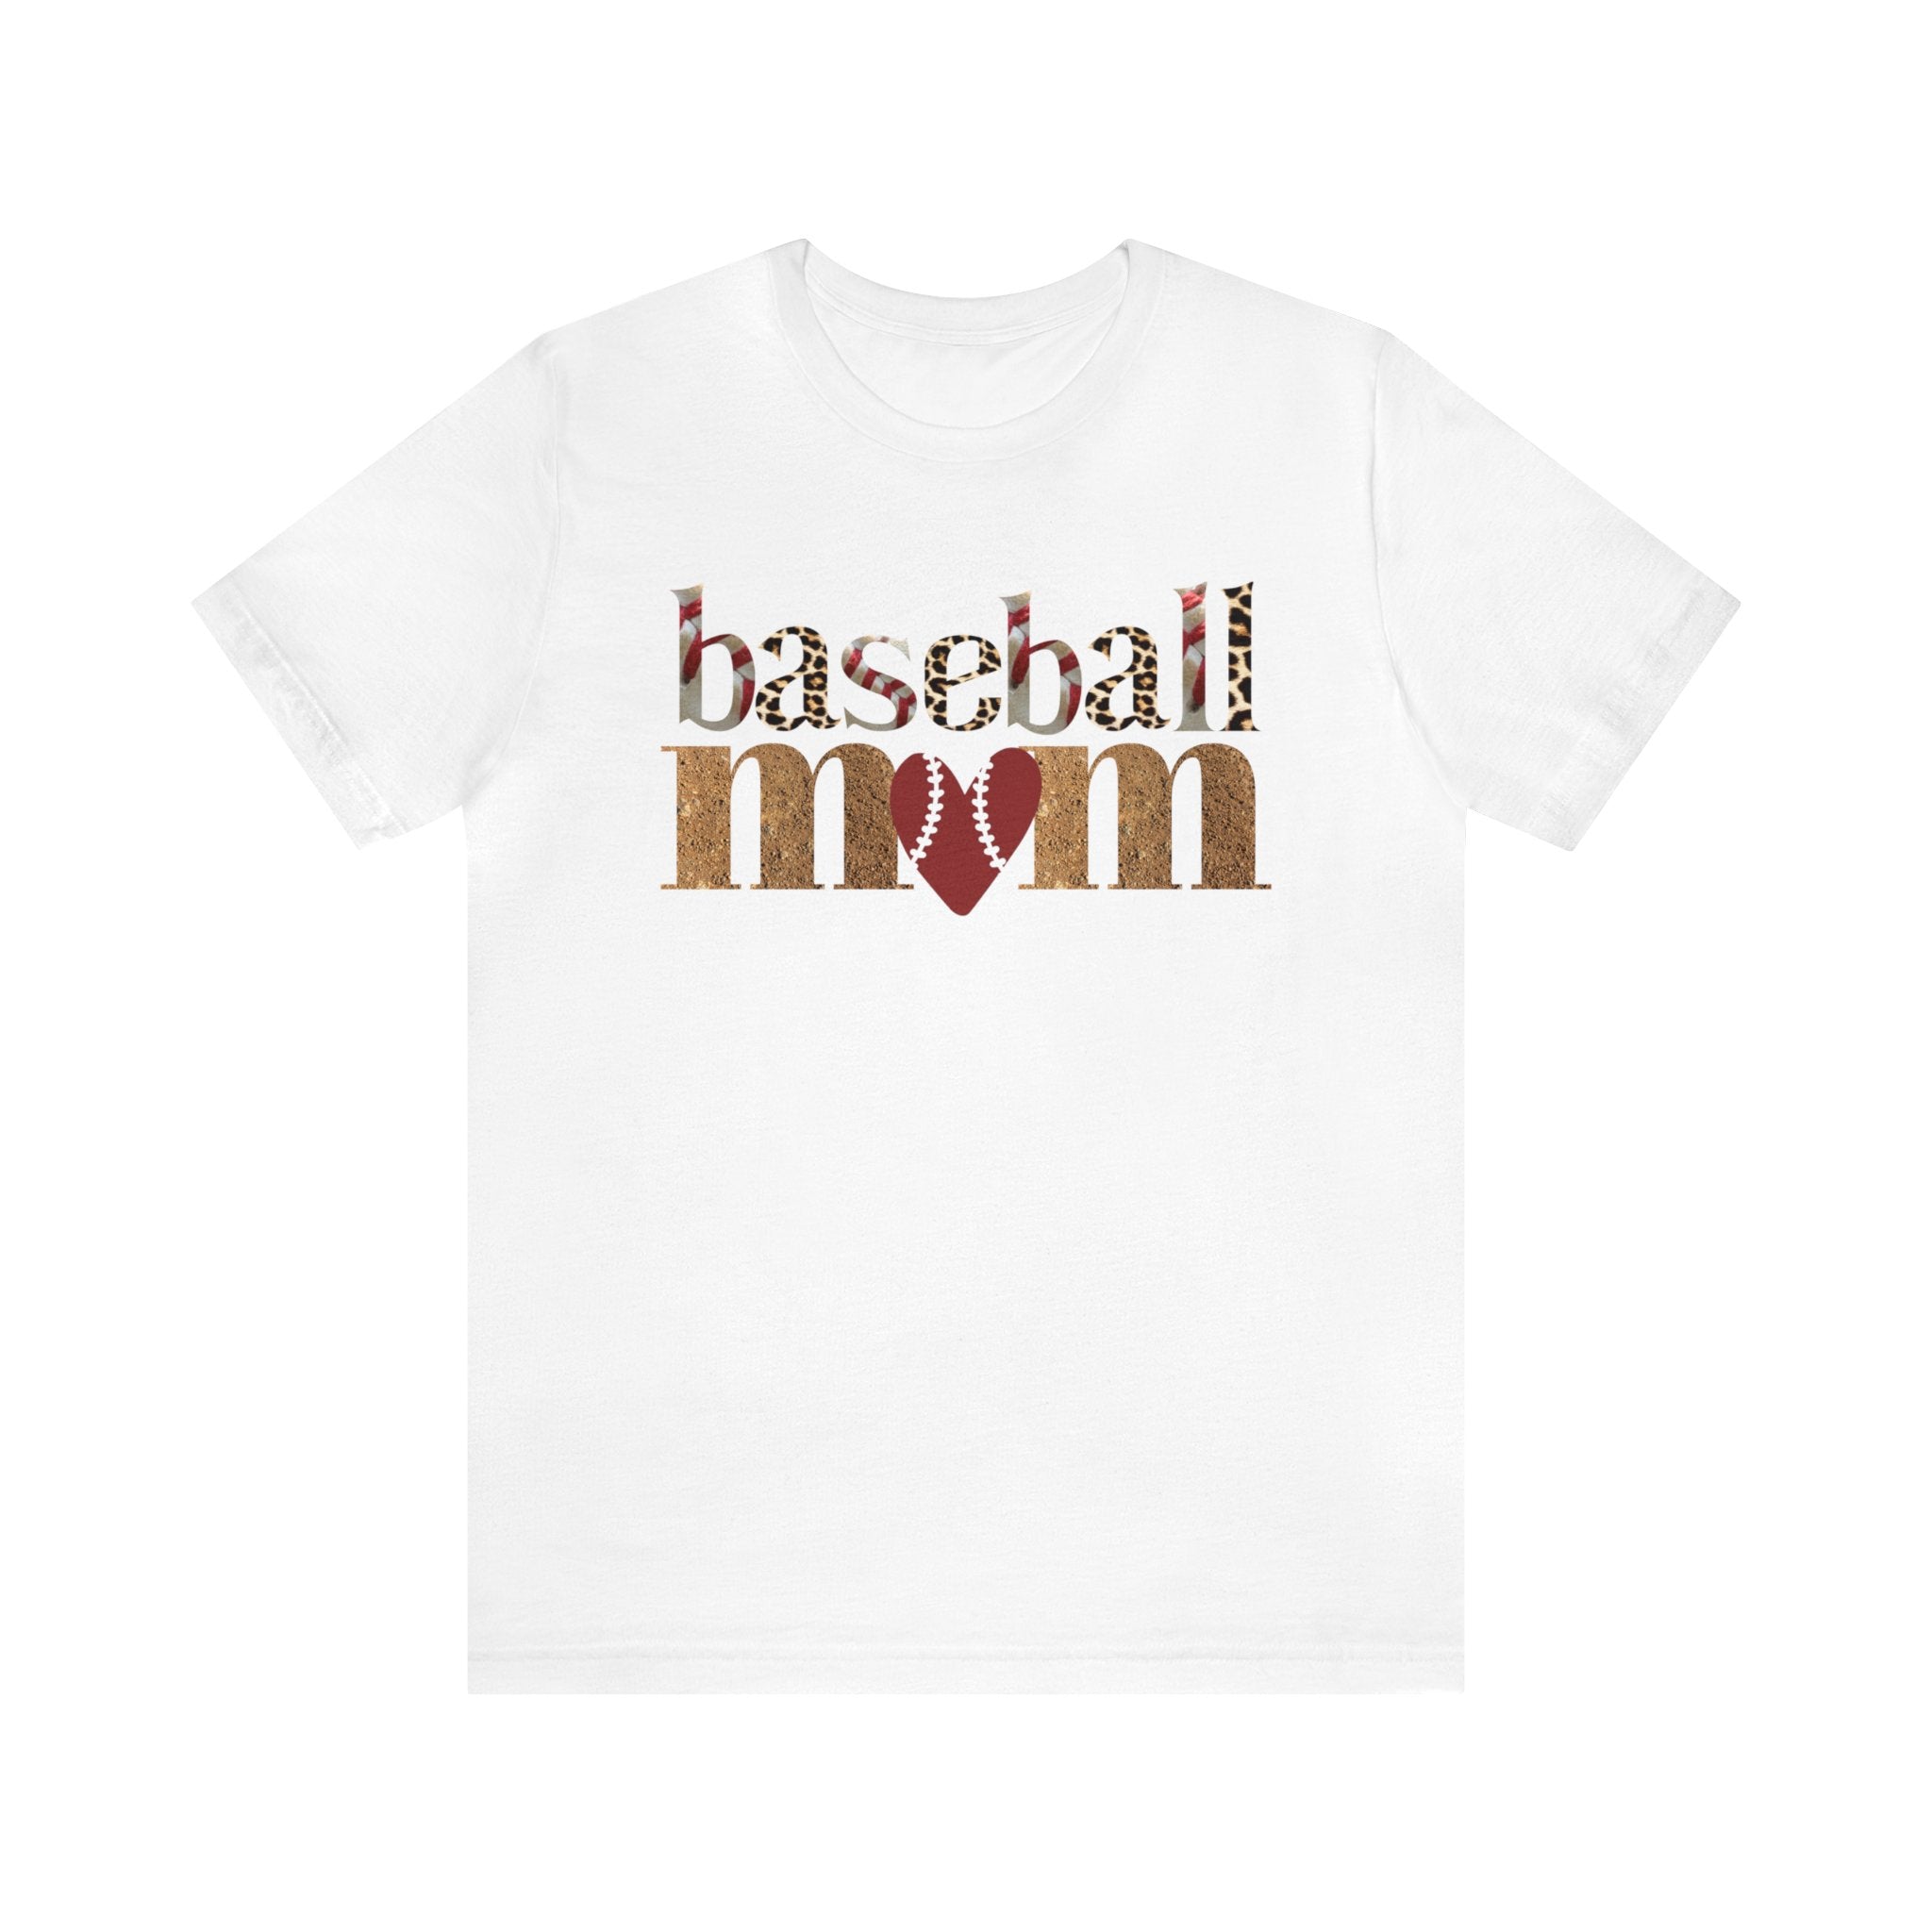 Baseball Mama (White)